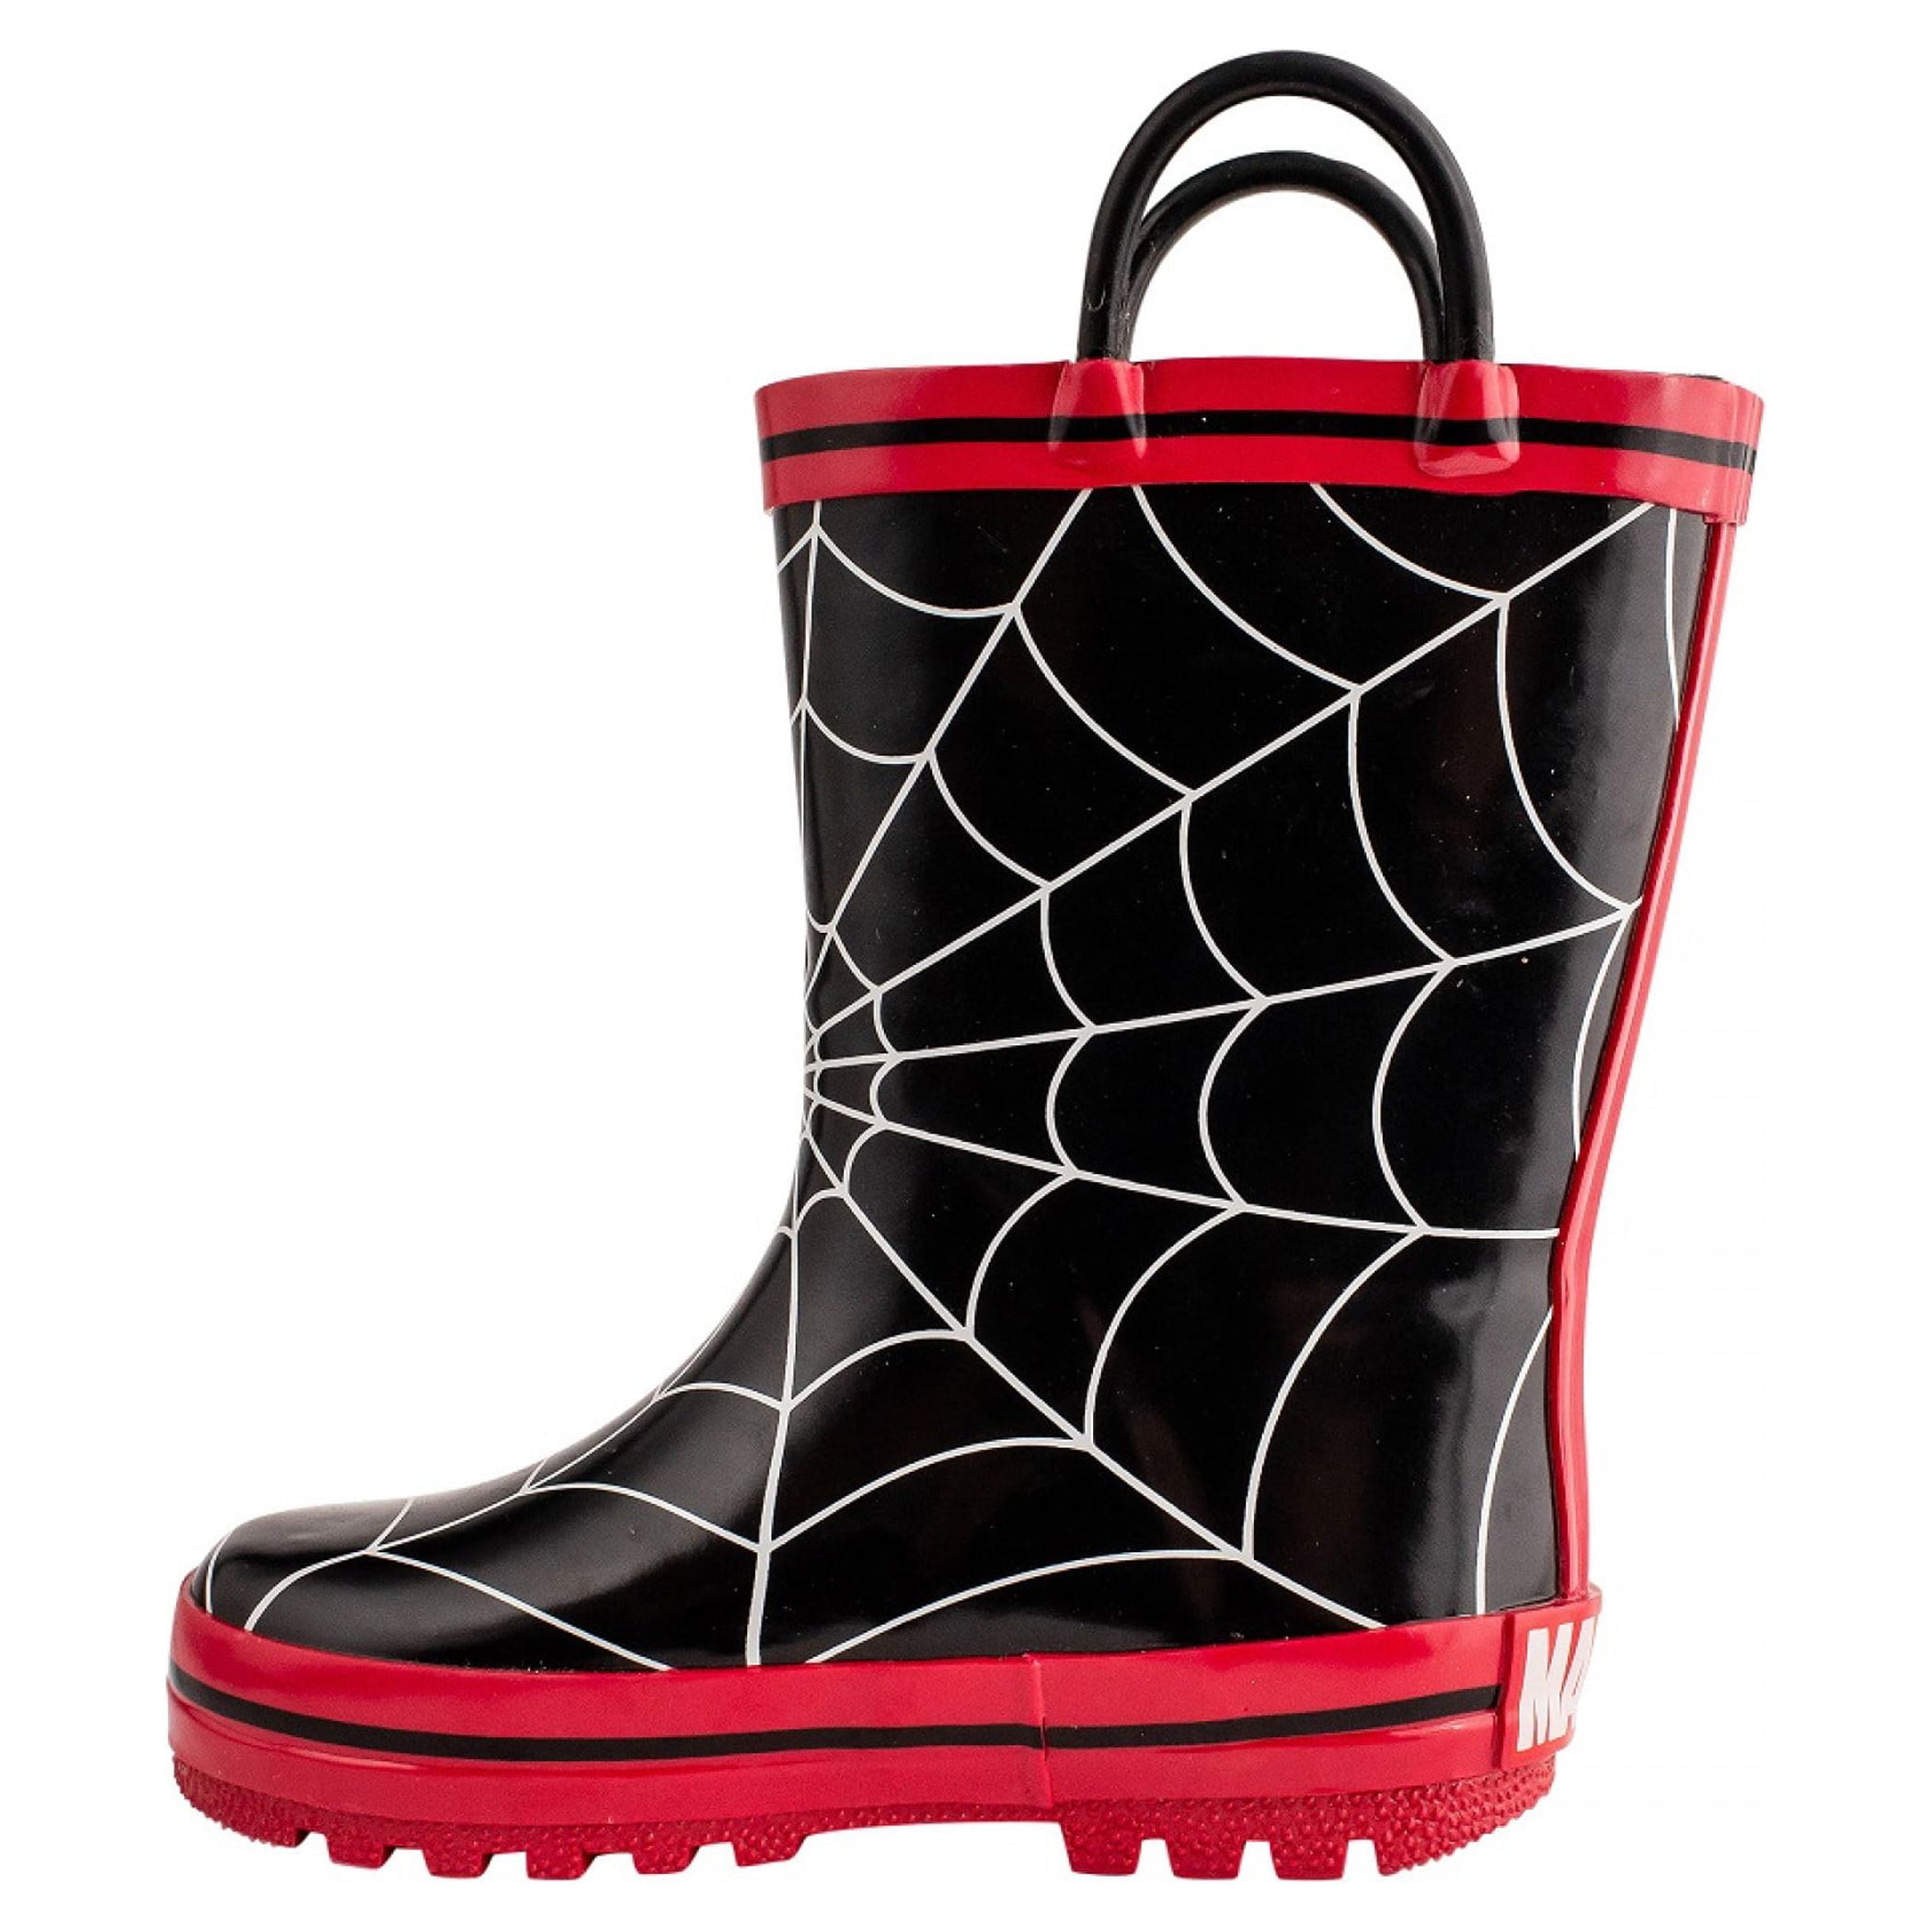 Marvel Spider-Man Rain Boots